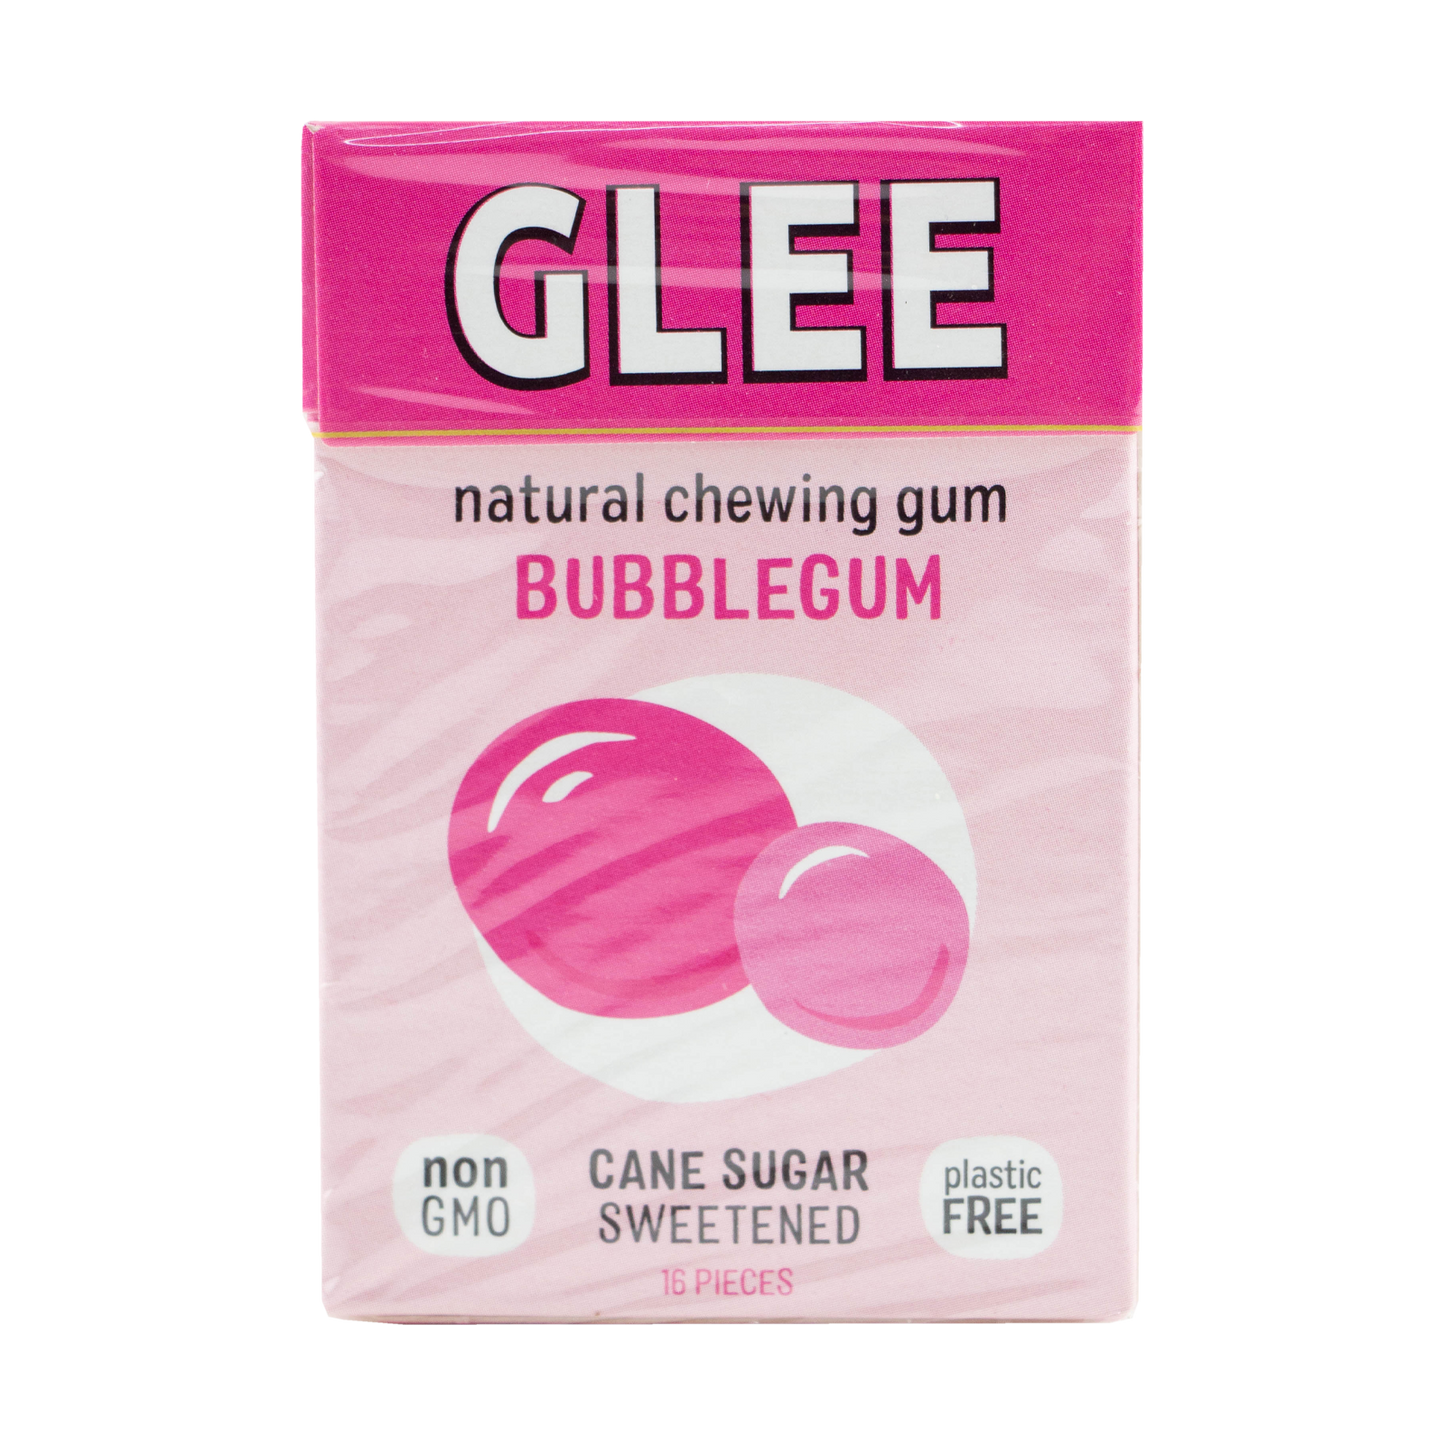 Glee Bubble Gum - Cane Sugar Sweetened